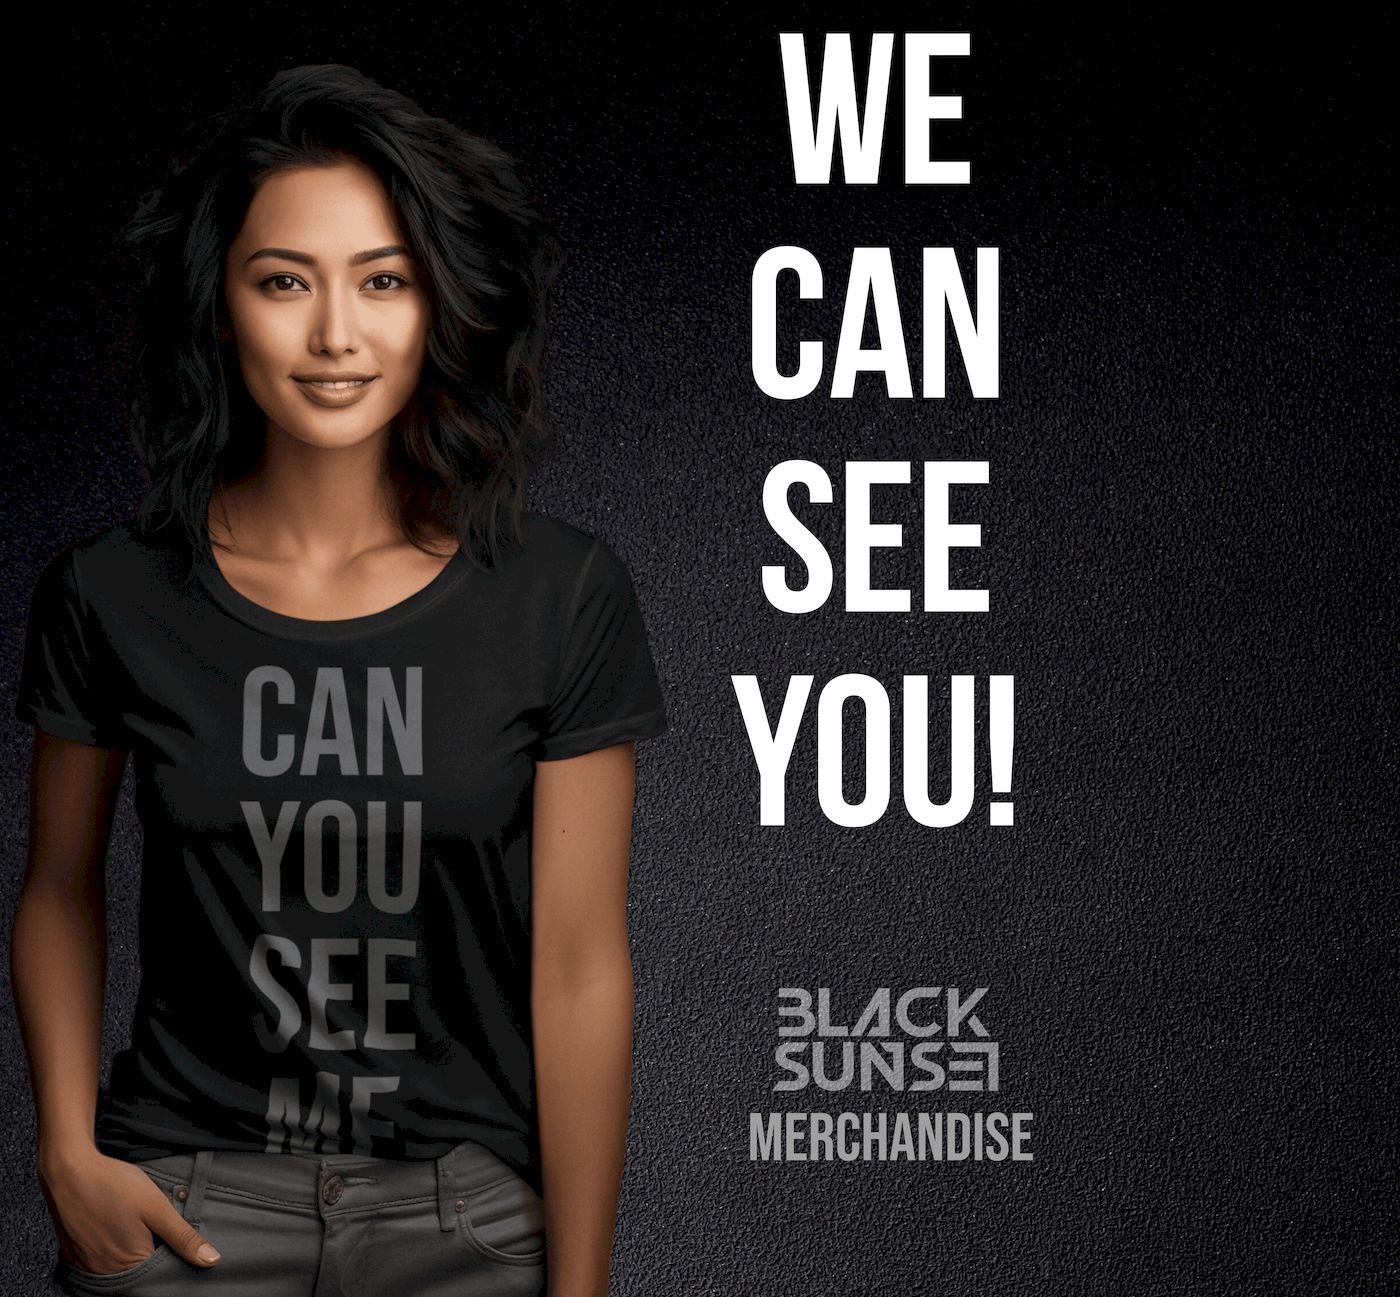 Naeratav naine kannab musta T-särki kirjaga 'CAN YOU SEE ME', taustal tekst 'WE CAN SEE YOU!' ja Blacksunseti logo kirjaga 'MERCHANDISE'